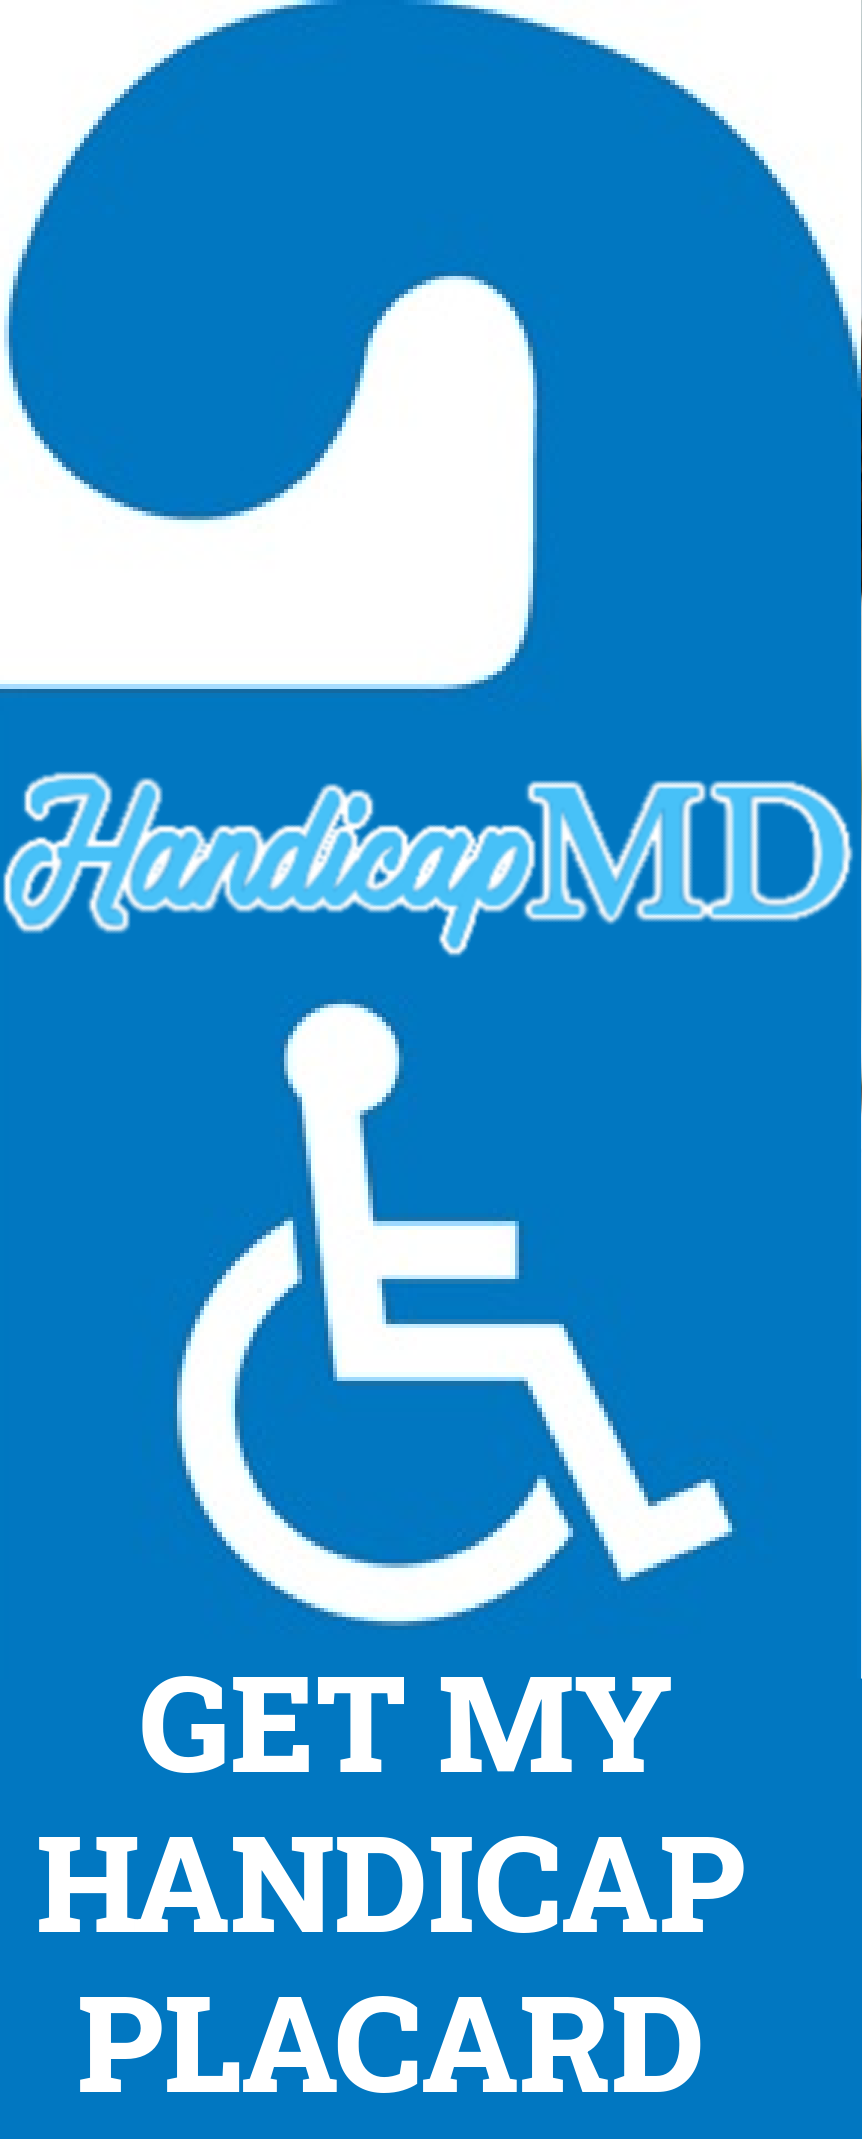 Online Guide to Handicap Parking in Arizona